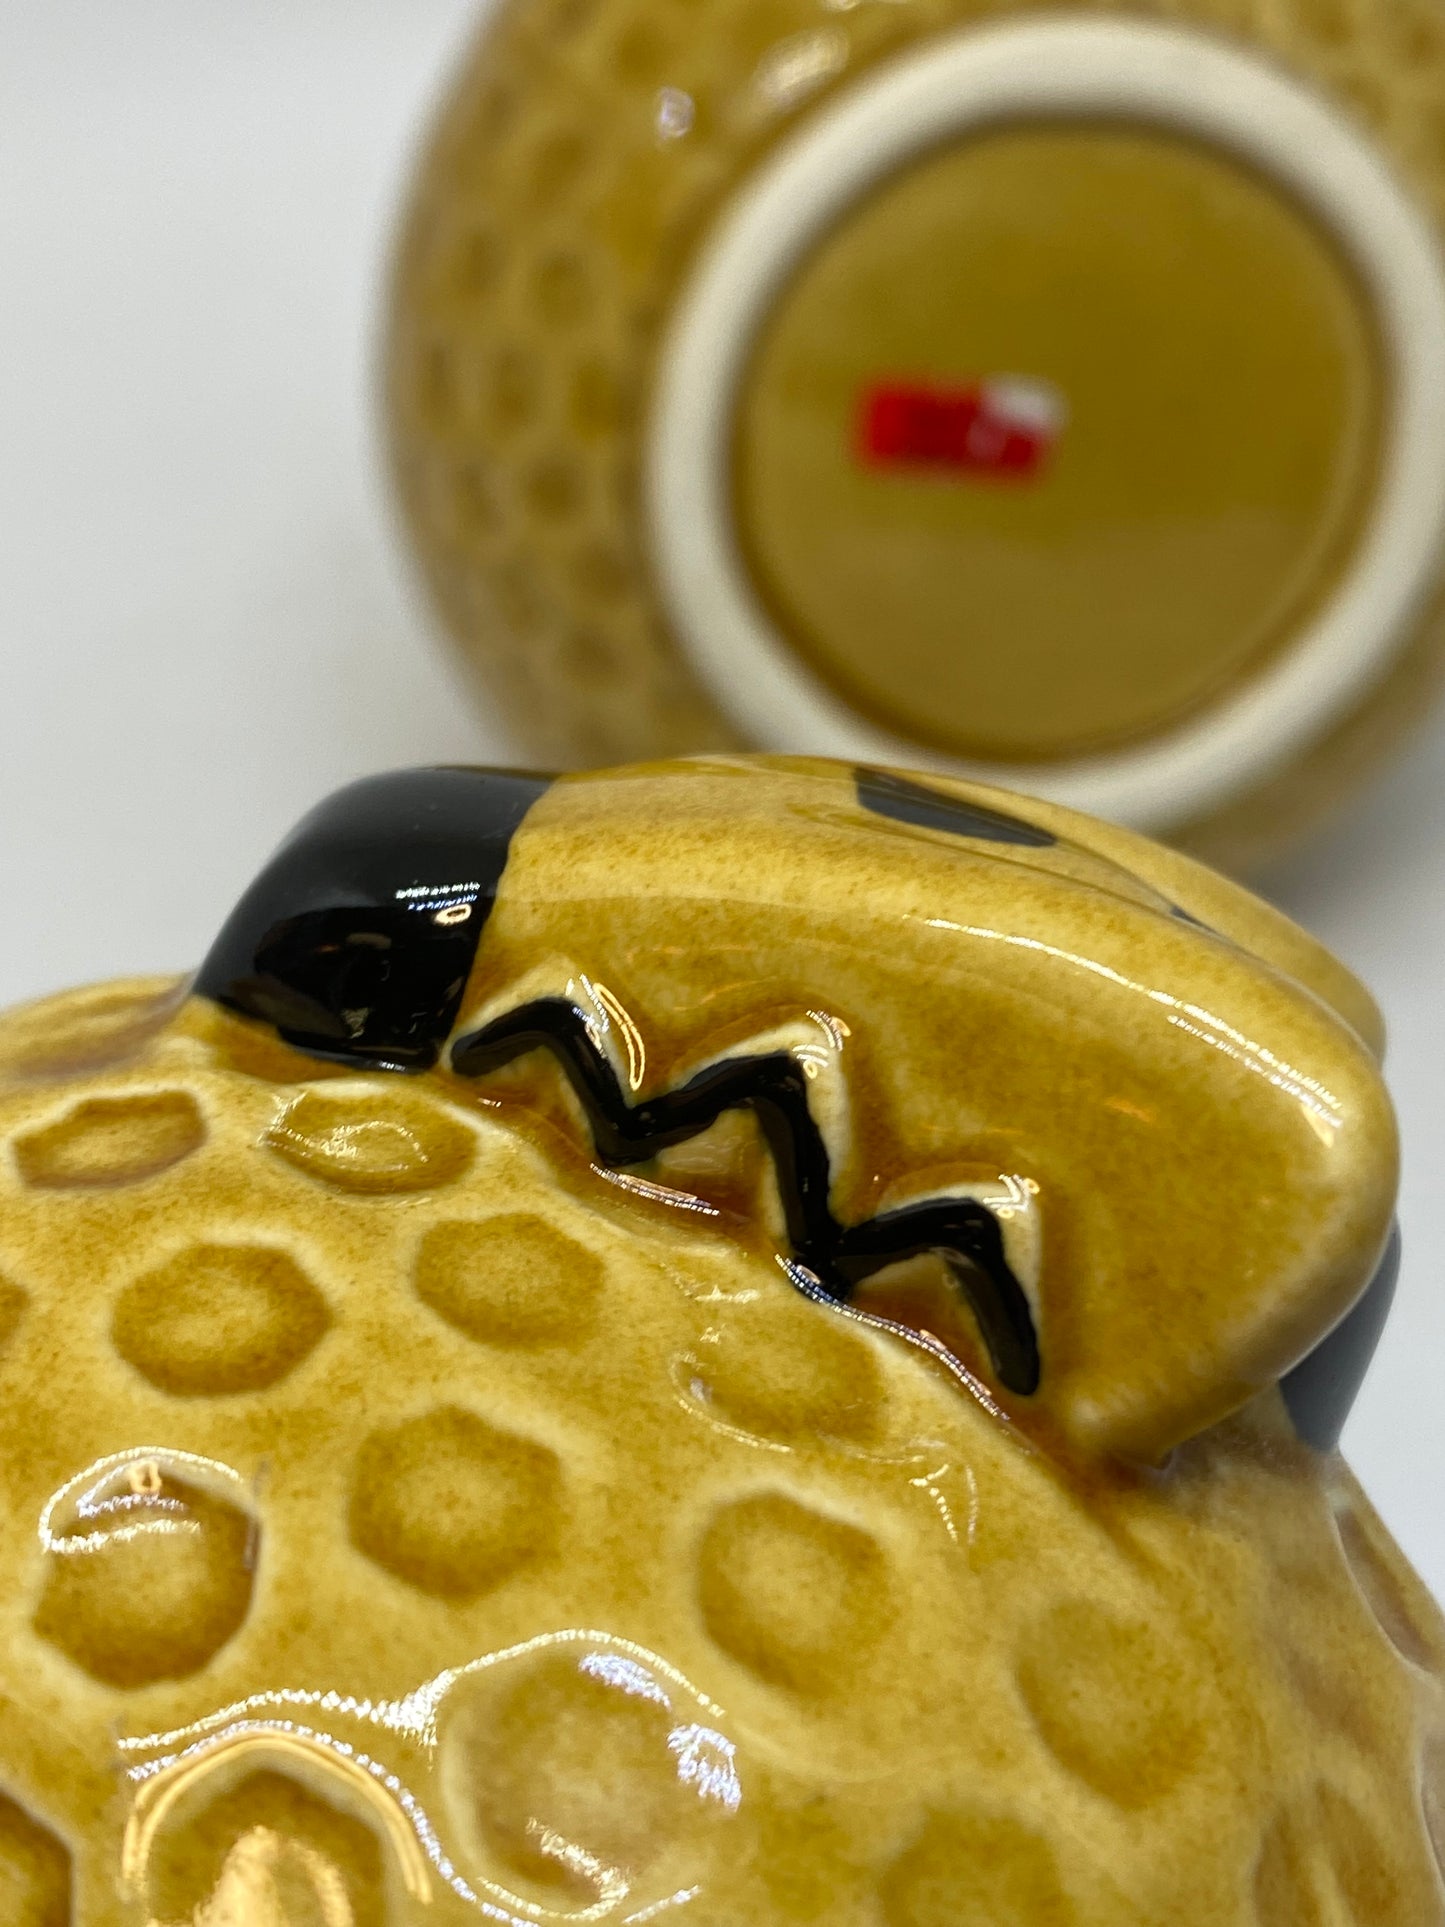 Vintage German Honey Pot with original sticker